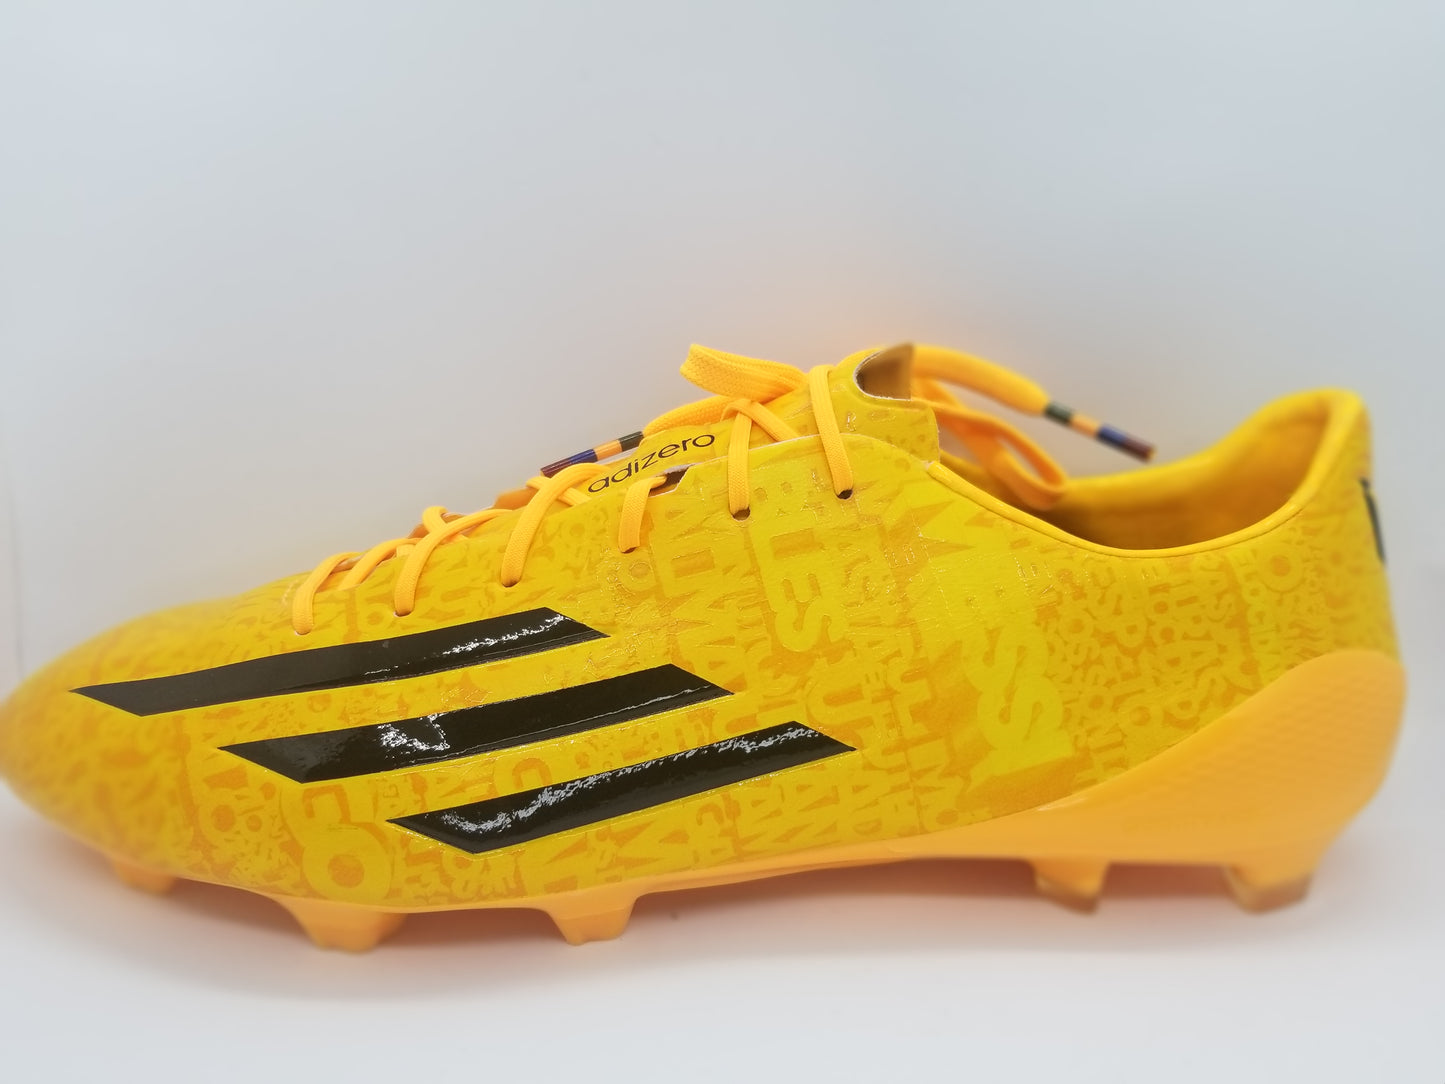 Adidas F50 Adizero Messi FG Boots